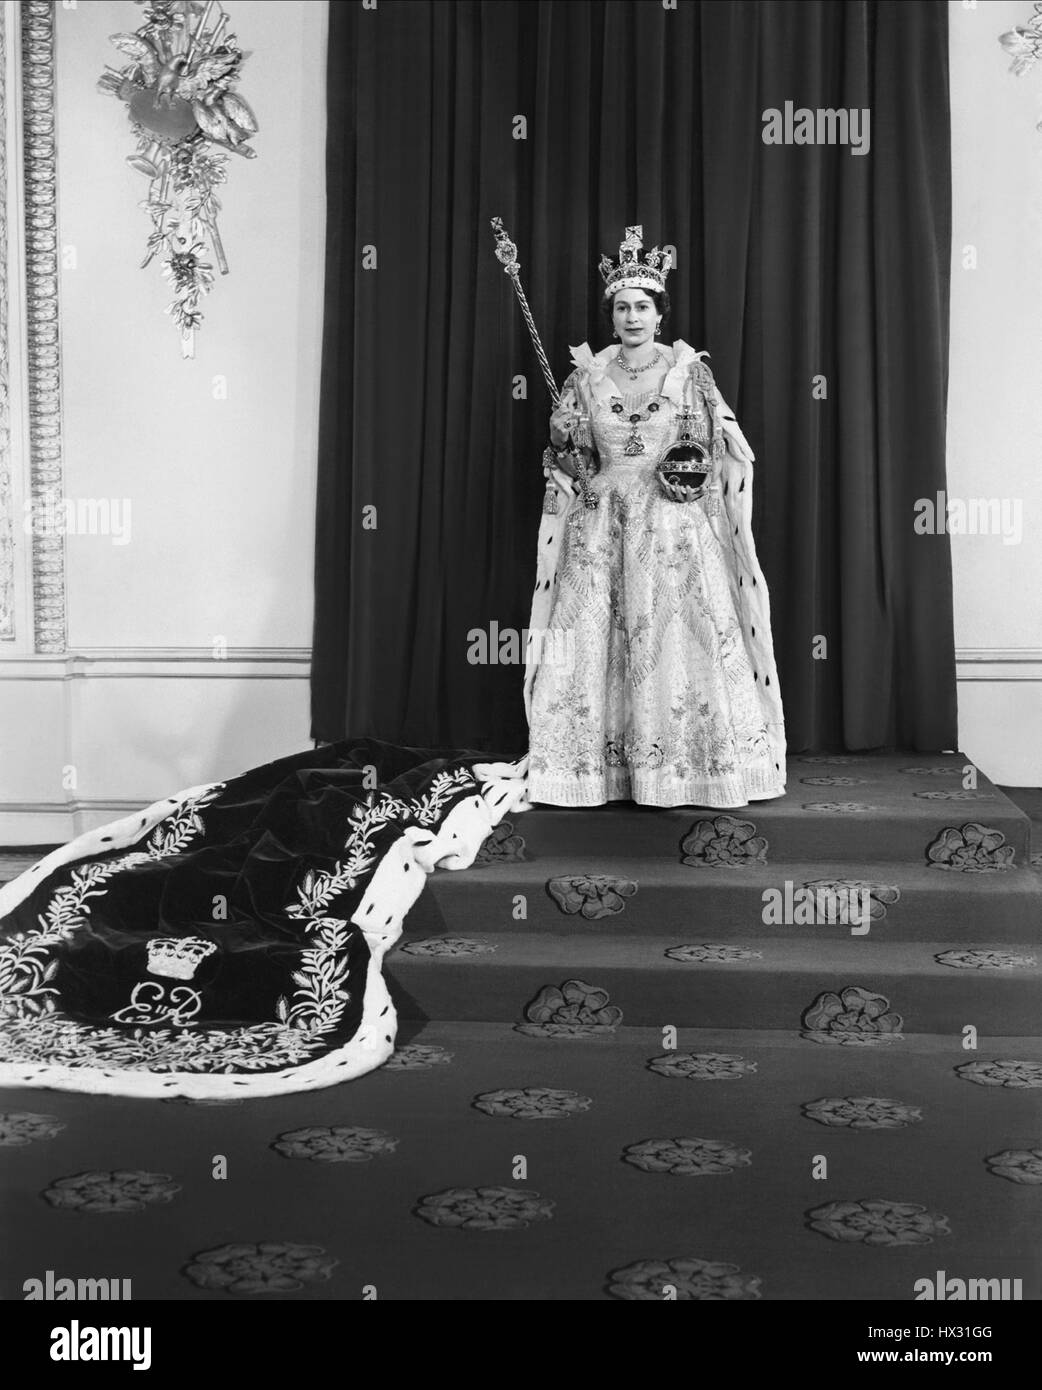 La famille royale LA REINE ELIZABETH II REINE D'ANGLETERRE 02 Juin 1953 Banque D'Images